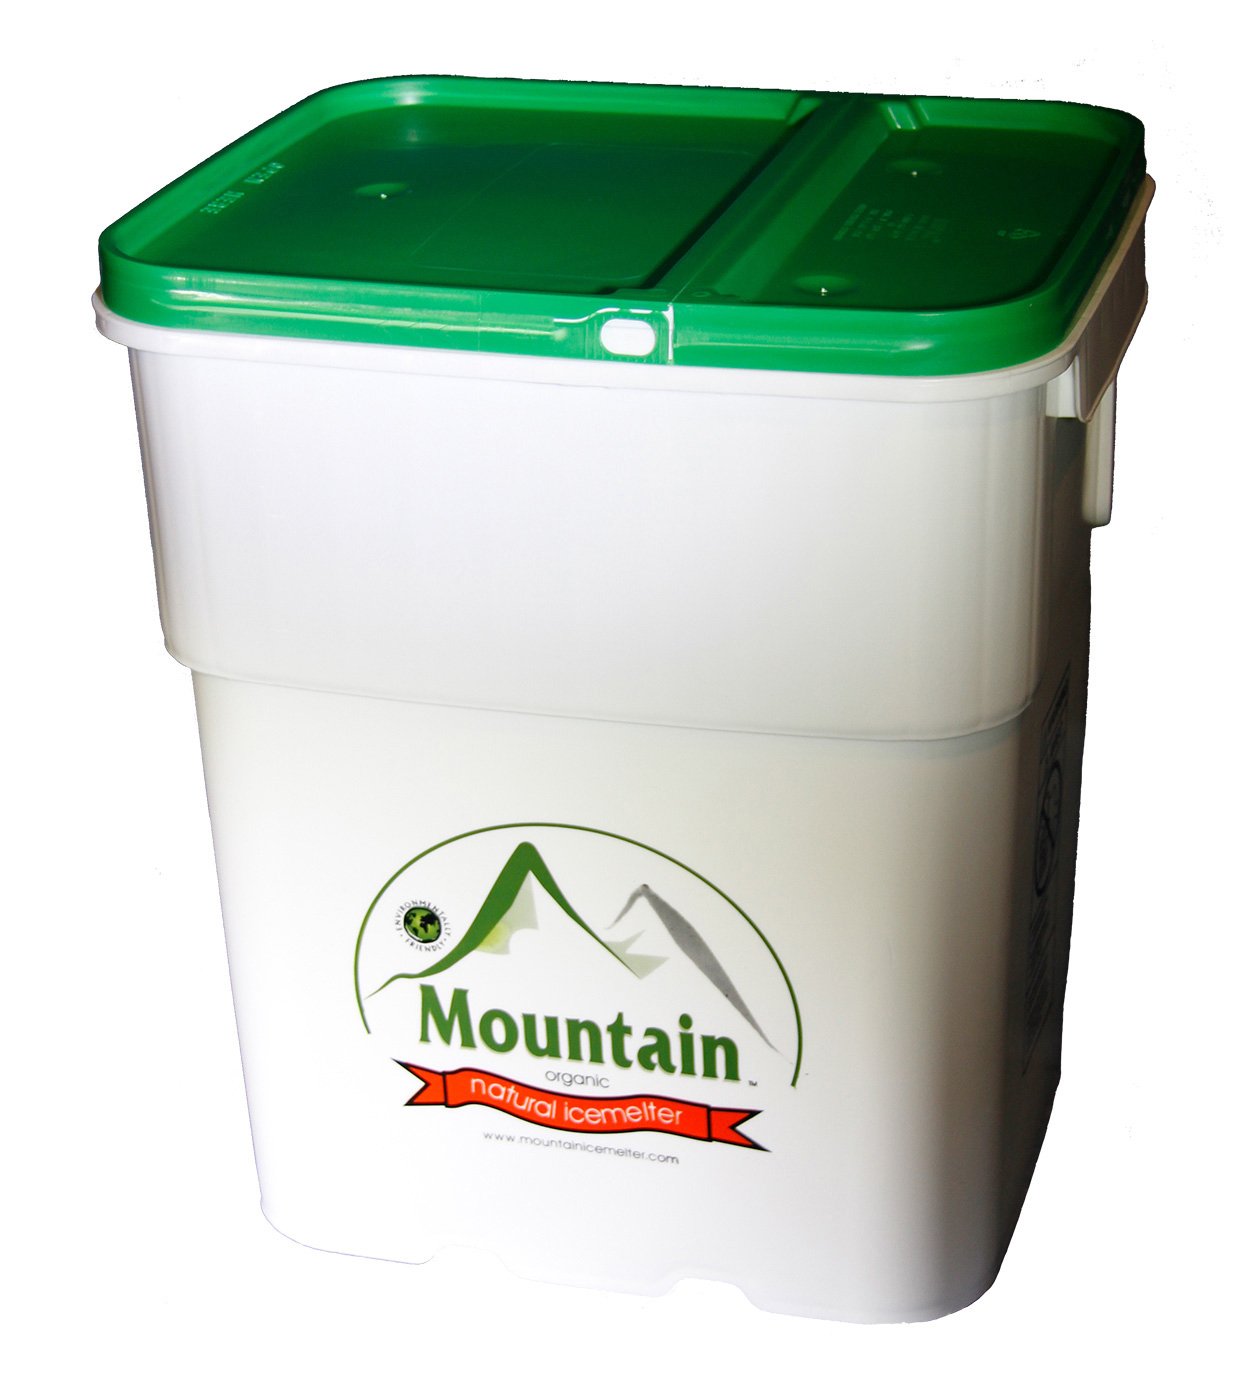 110 Pound Bin of Mountain Organic Natural Eco & Pet Friendly Ice Melts